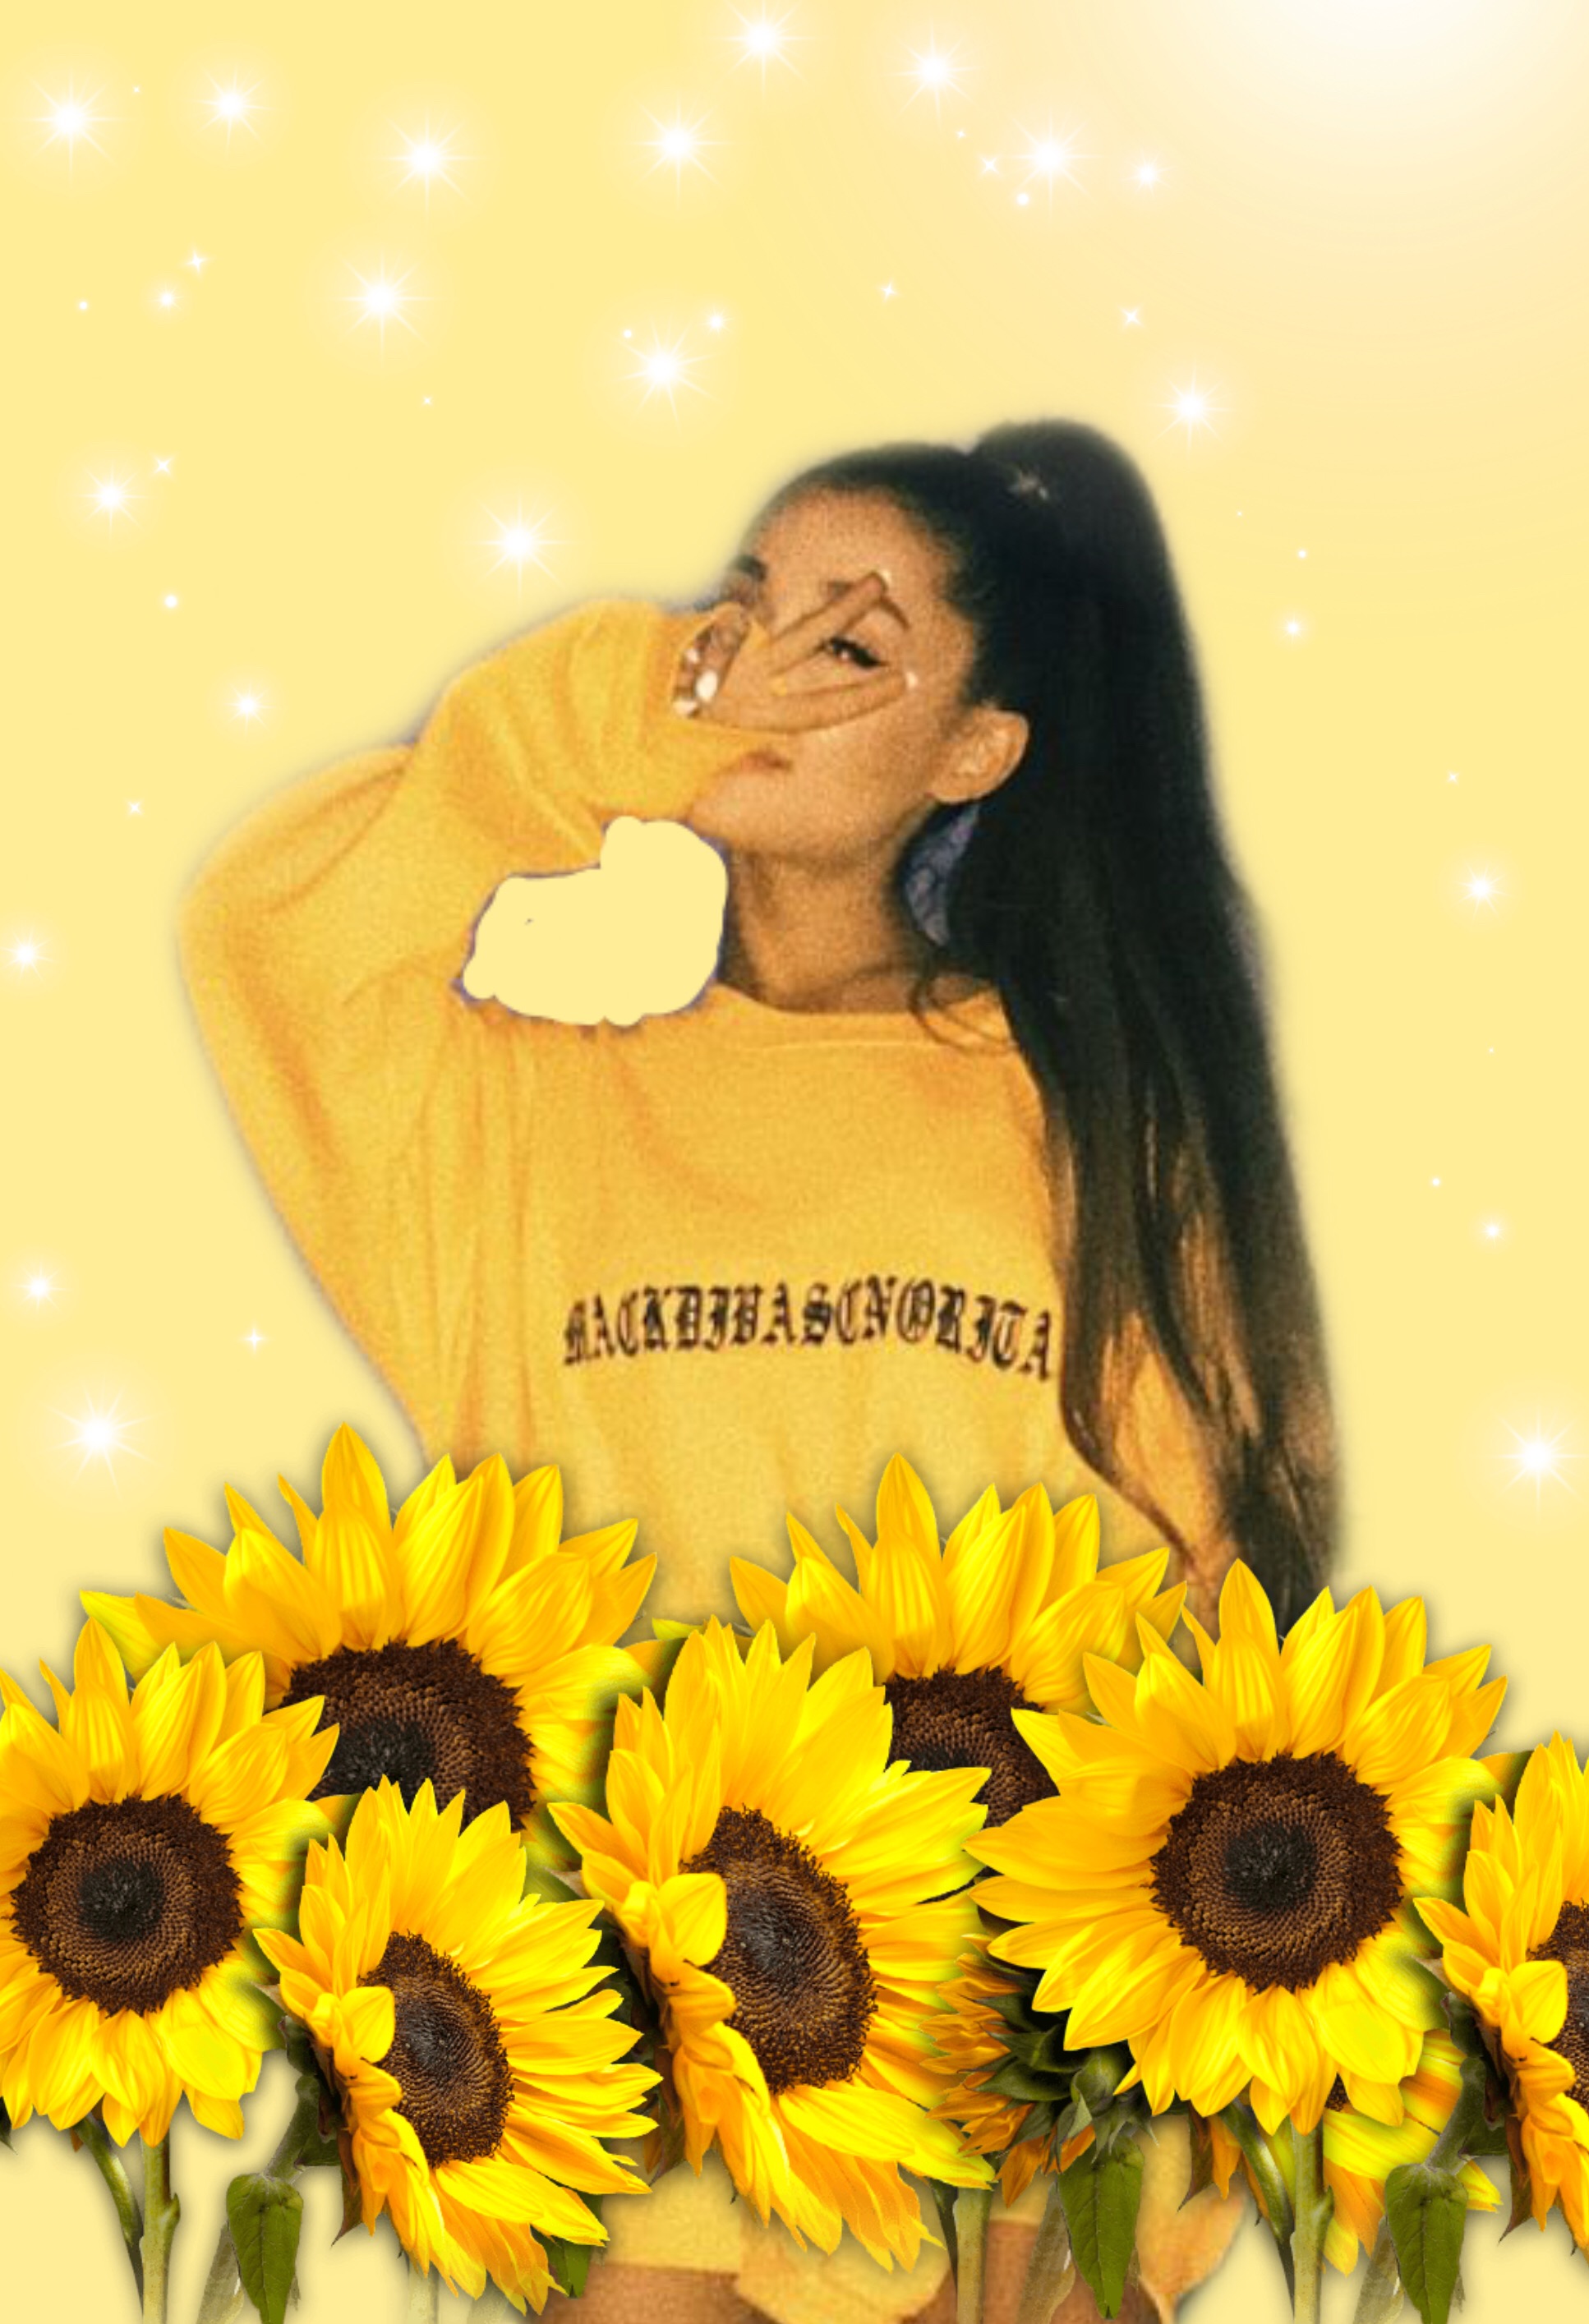 Ariana Grande yellow iPhone wallpaper Image by Chloe♡